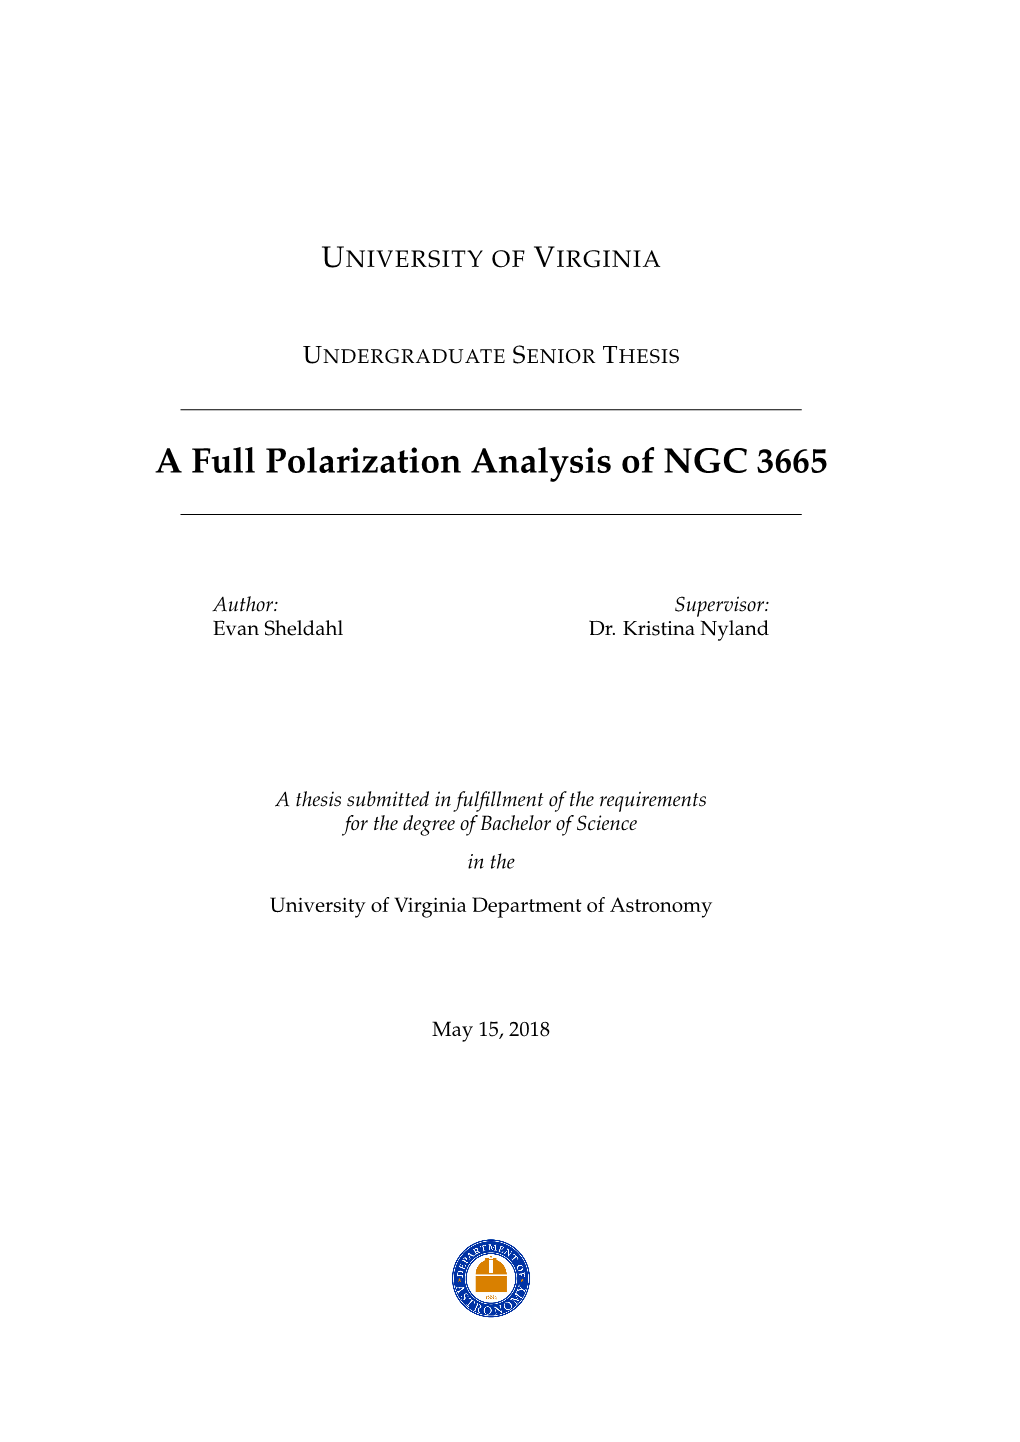 A Full Polarization Analysis of NGC 3665